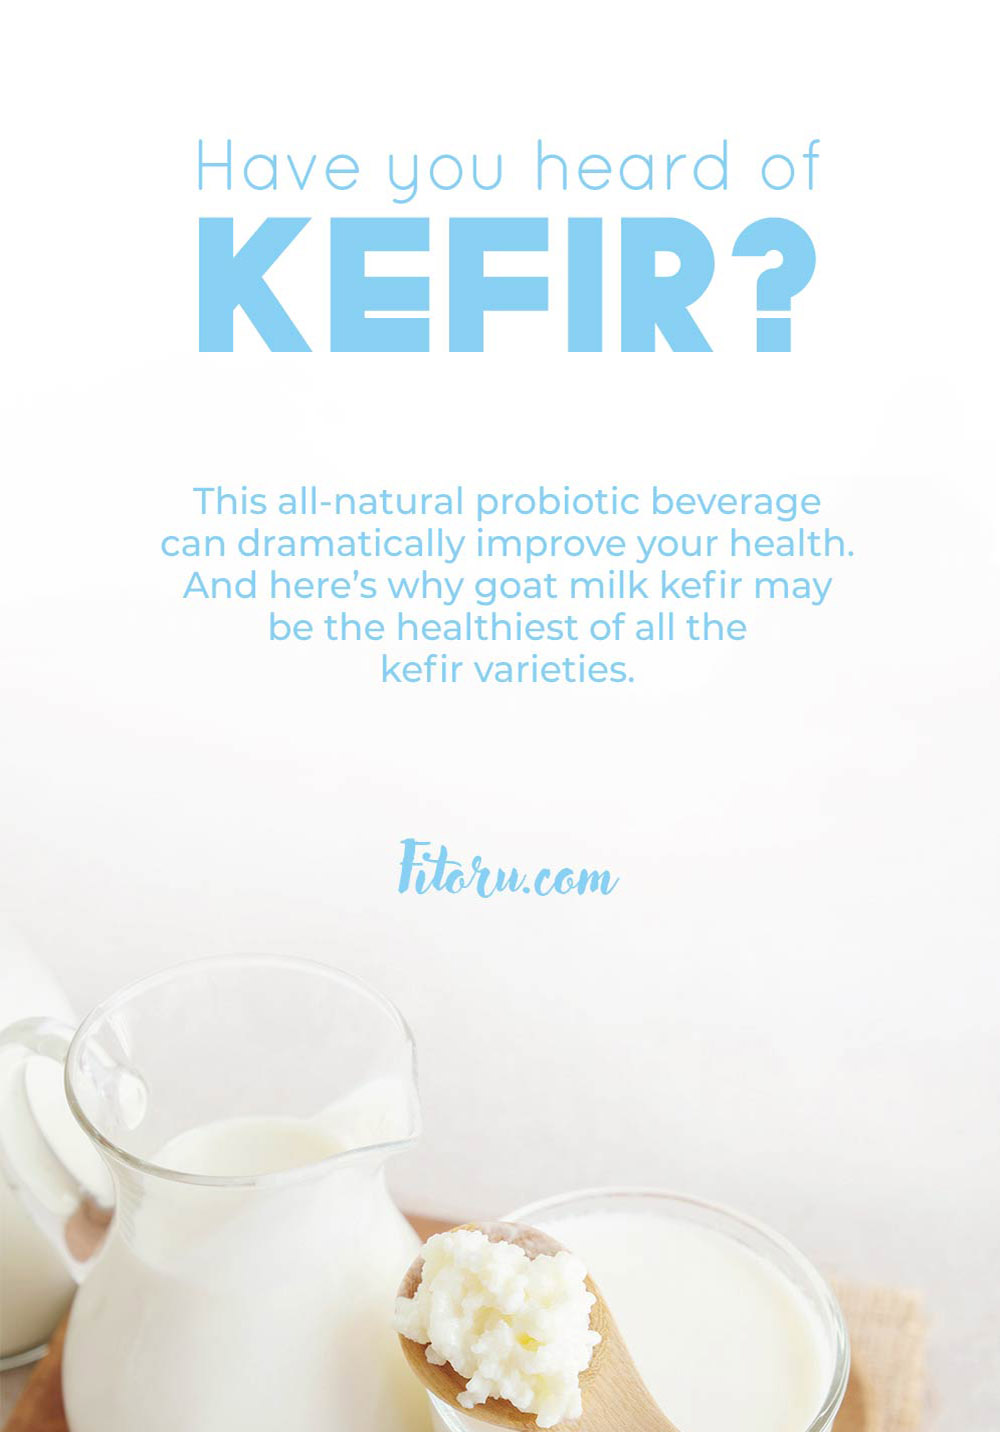 Why goat milk kefir is the healthiest variety. 